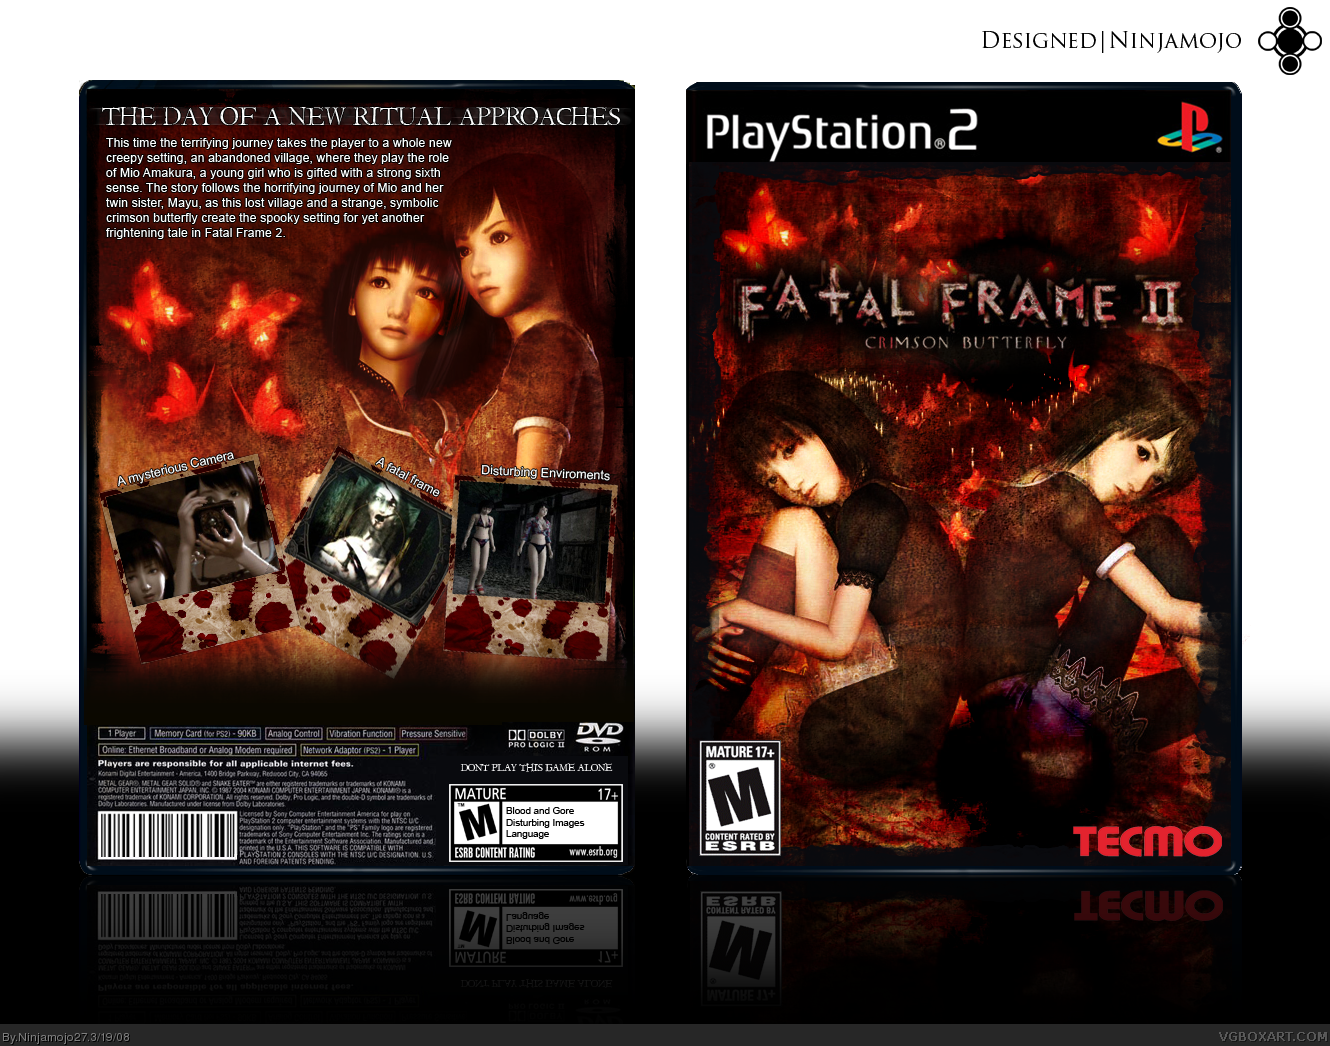 Fatal Frame II: Crimson Butterfly box cover